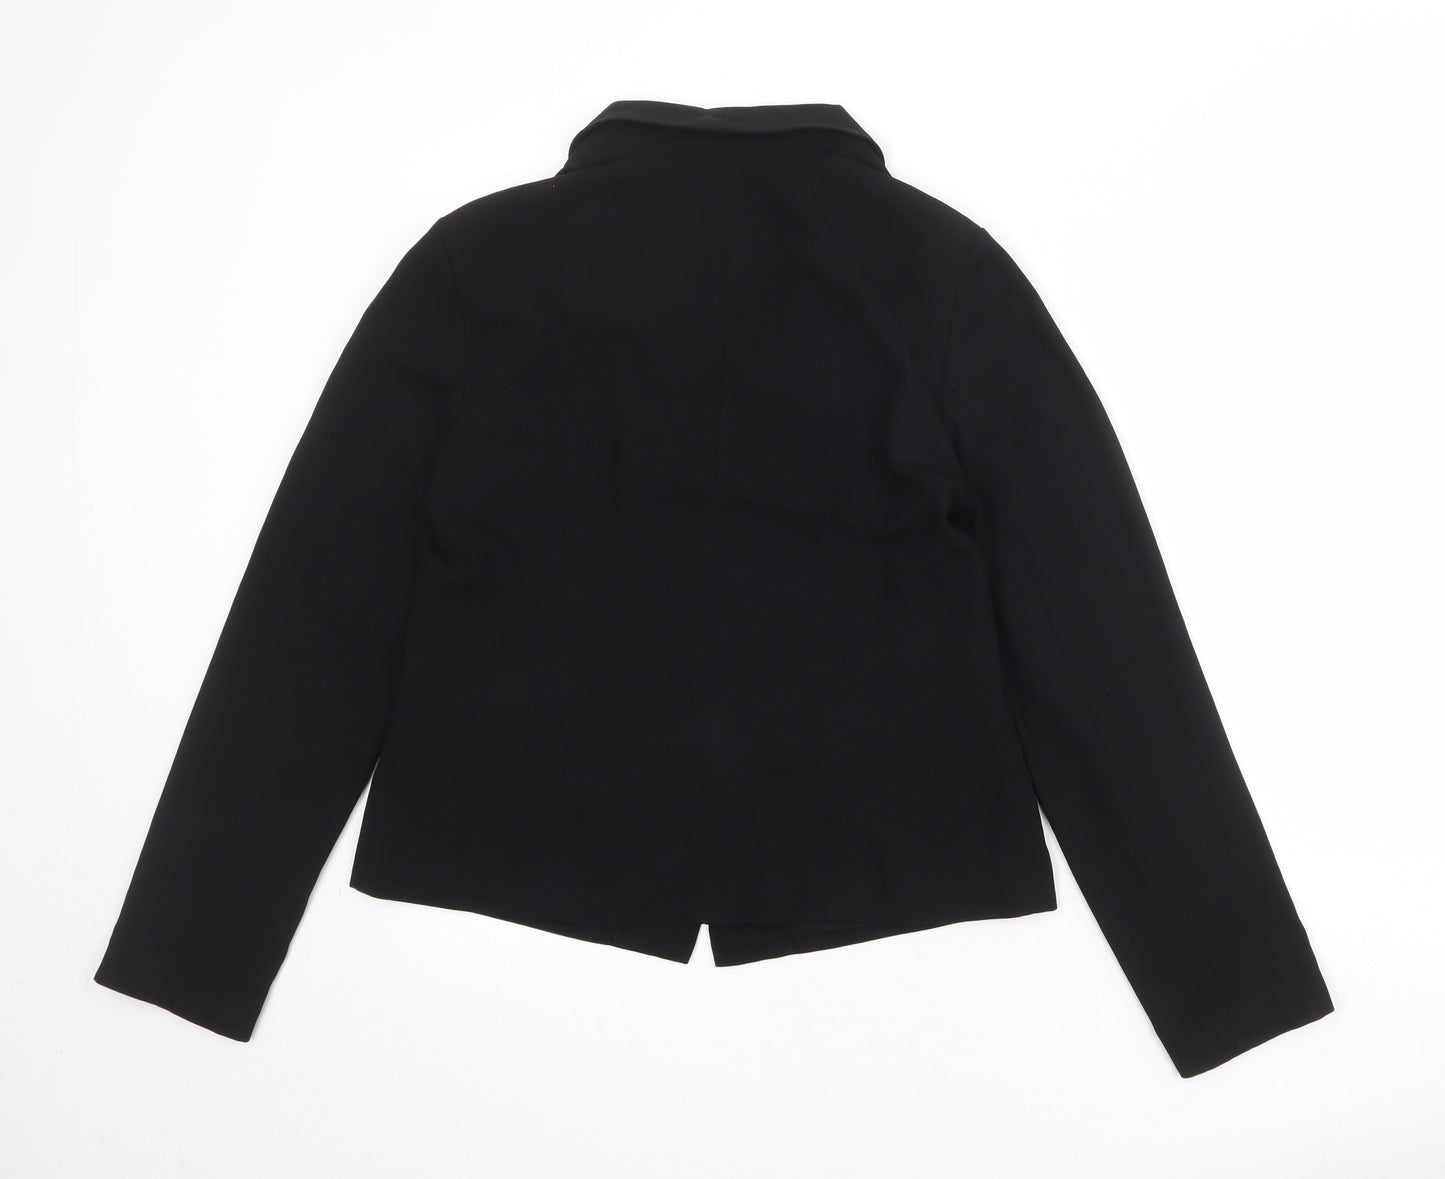 New Look Womens Black Polyester Jacket Blazer Size 12 - Open